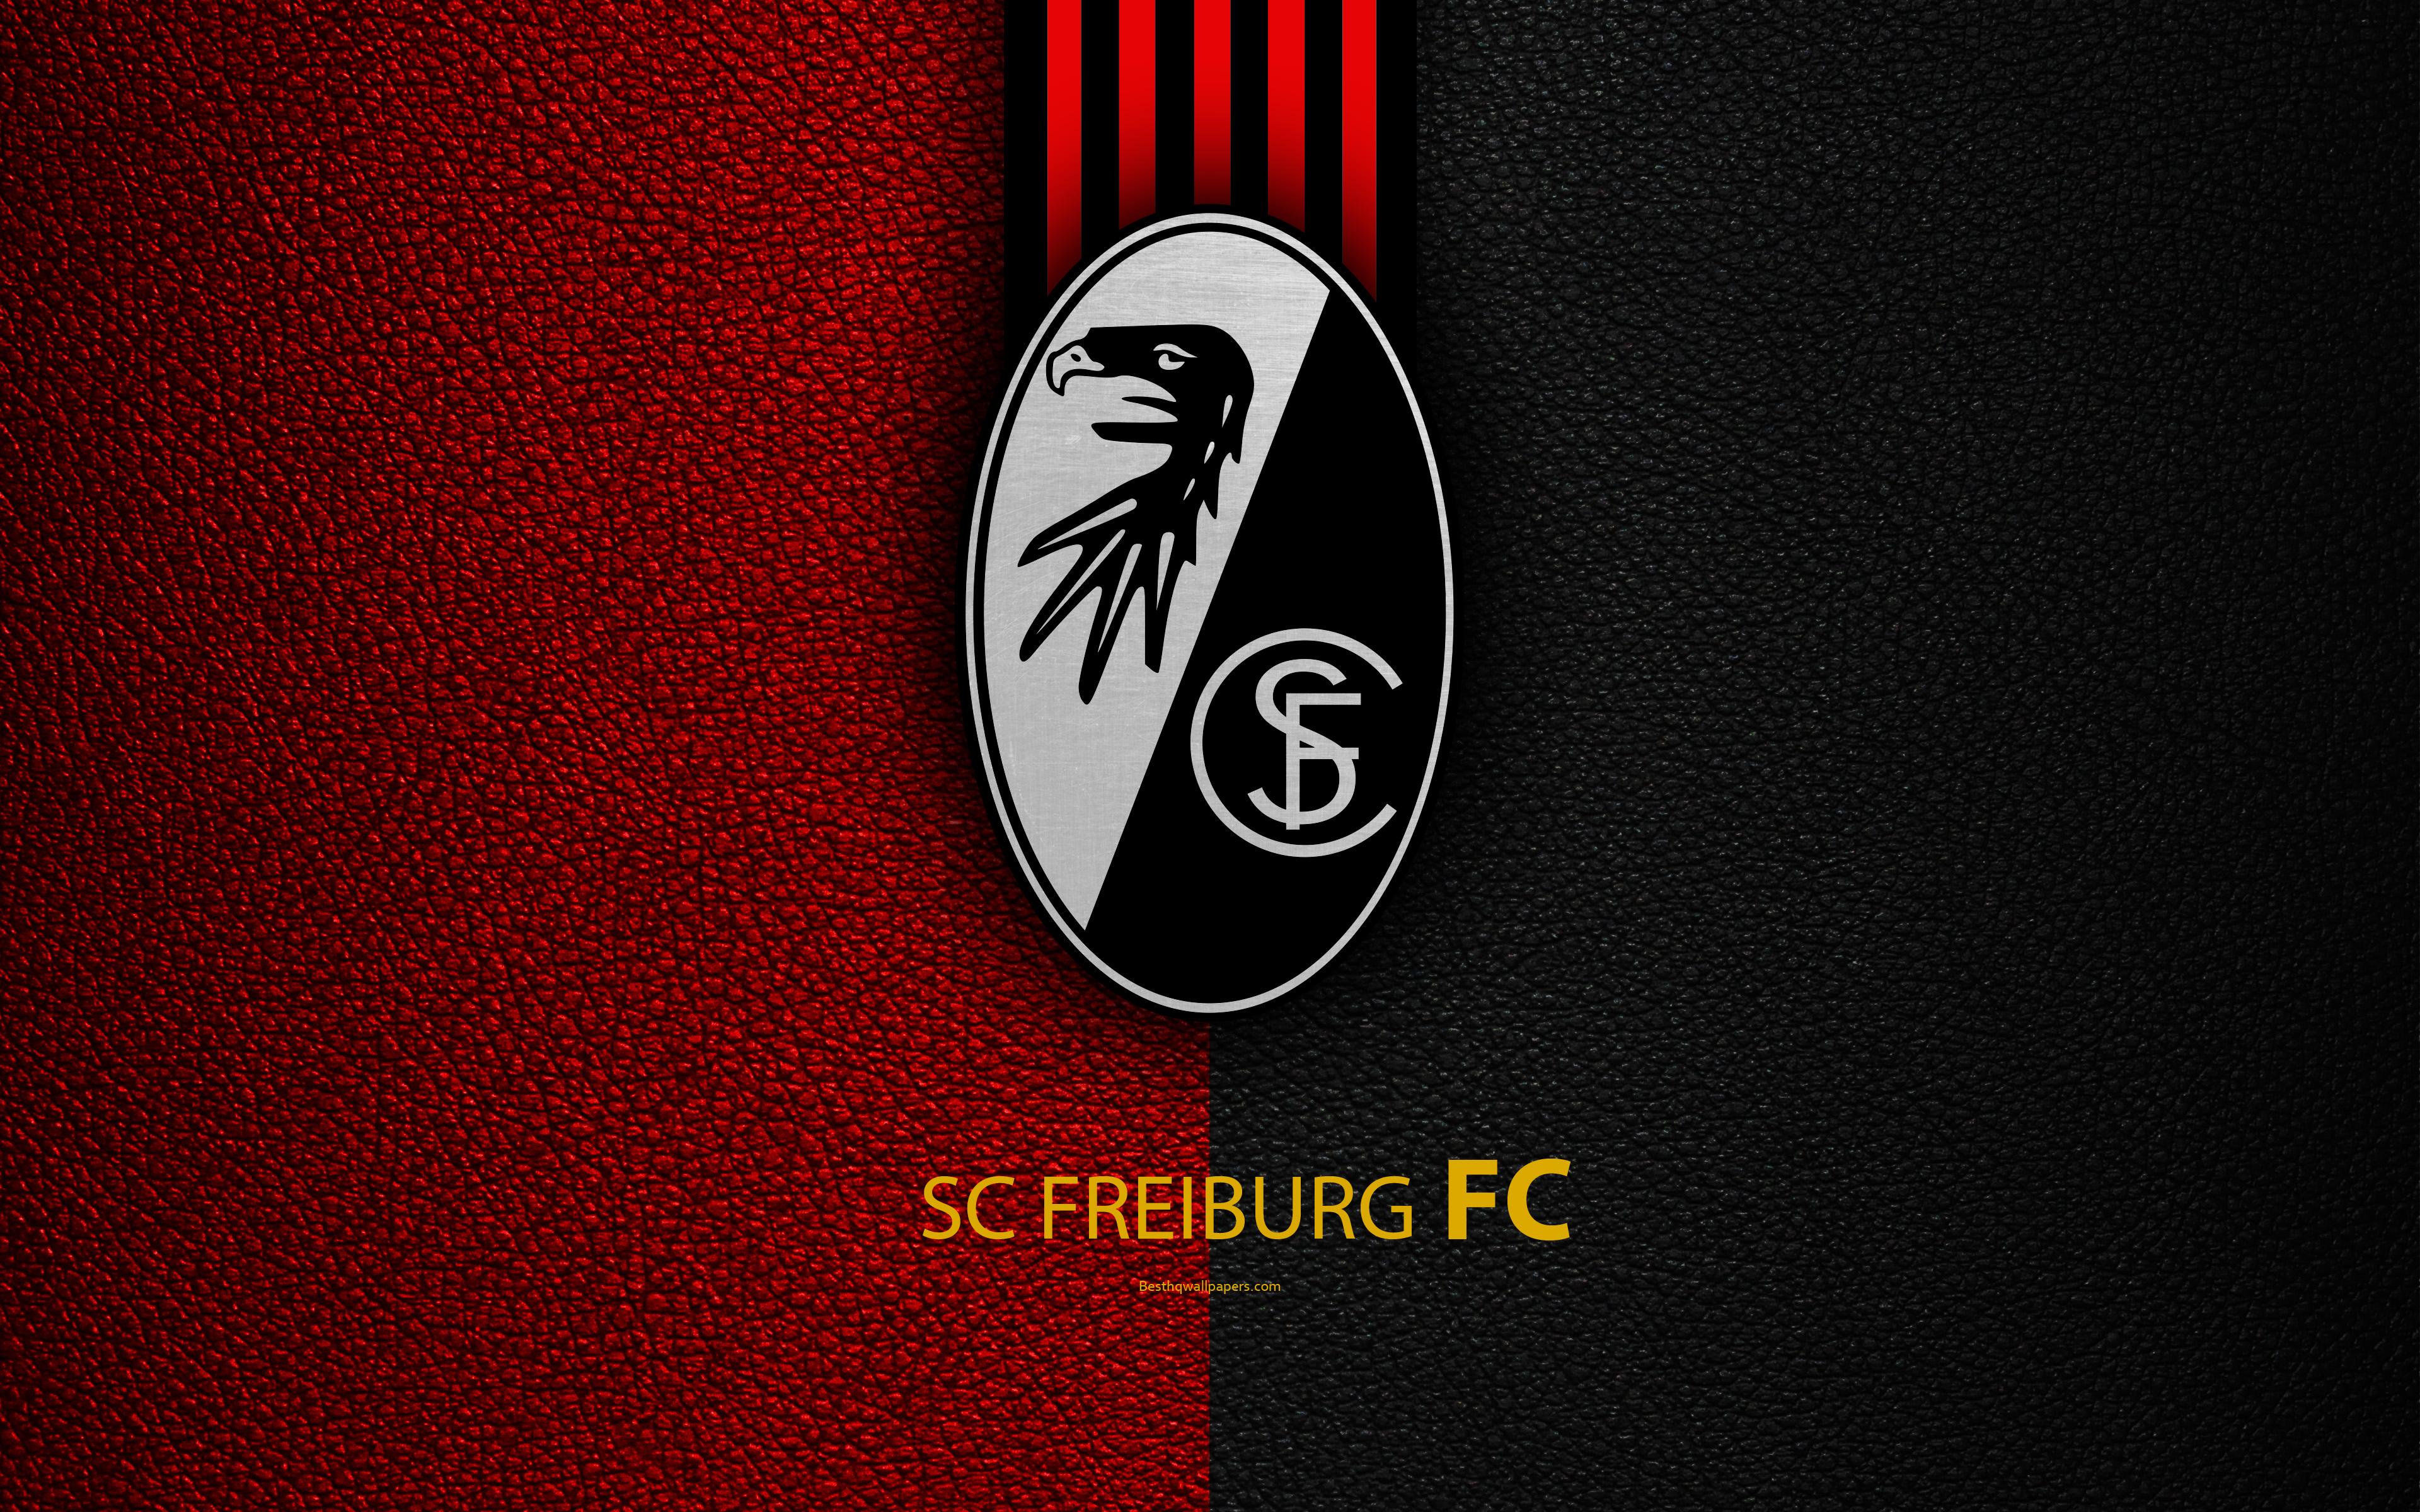 Download wallpaper SC Freiburg FC, 4k, German football club